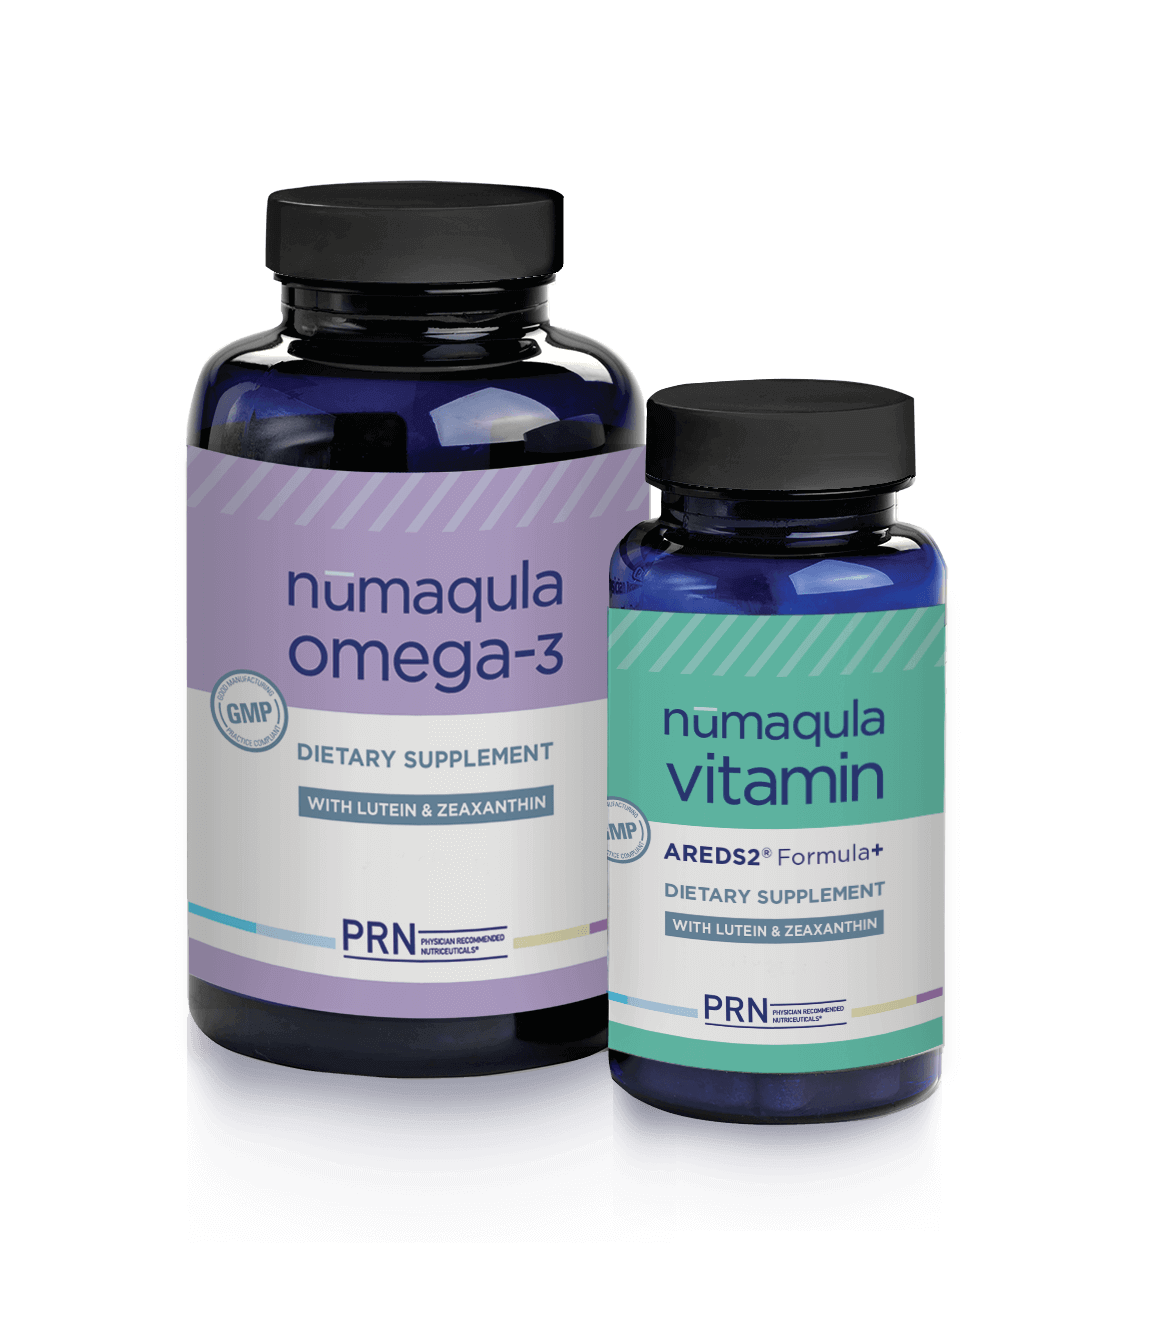 Numaqula Omega Vitamin Bottles 2020 5.png